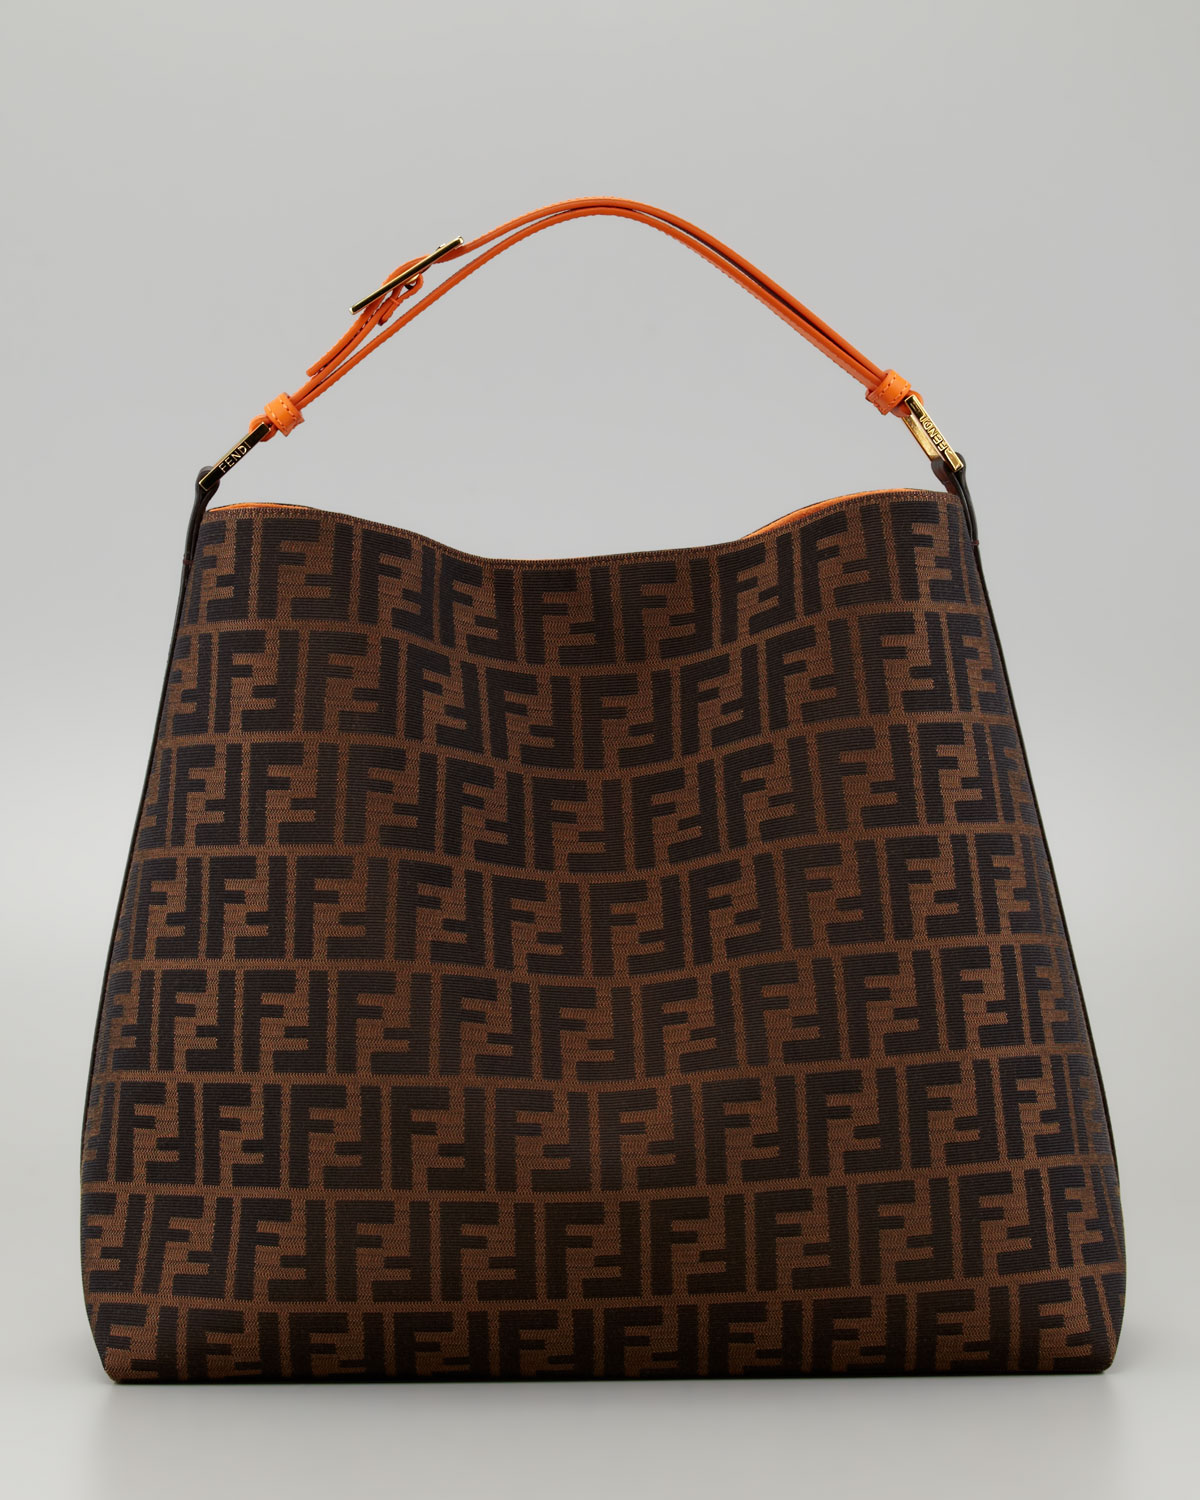 Lyst - Fendi Zucca Large Hobo Bag in Brown